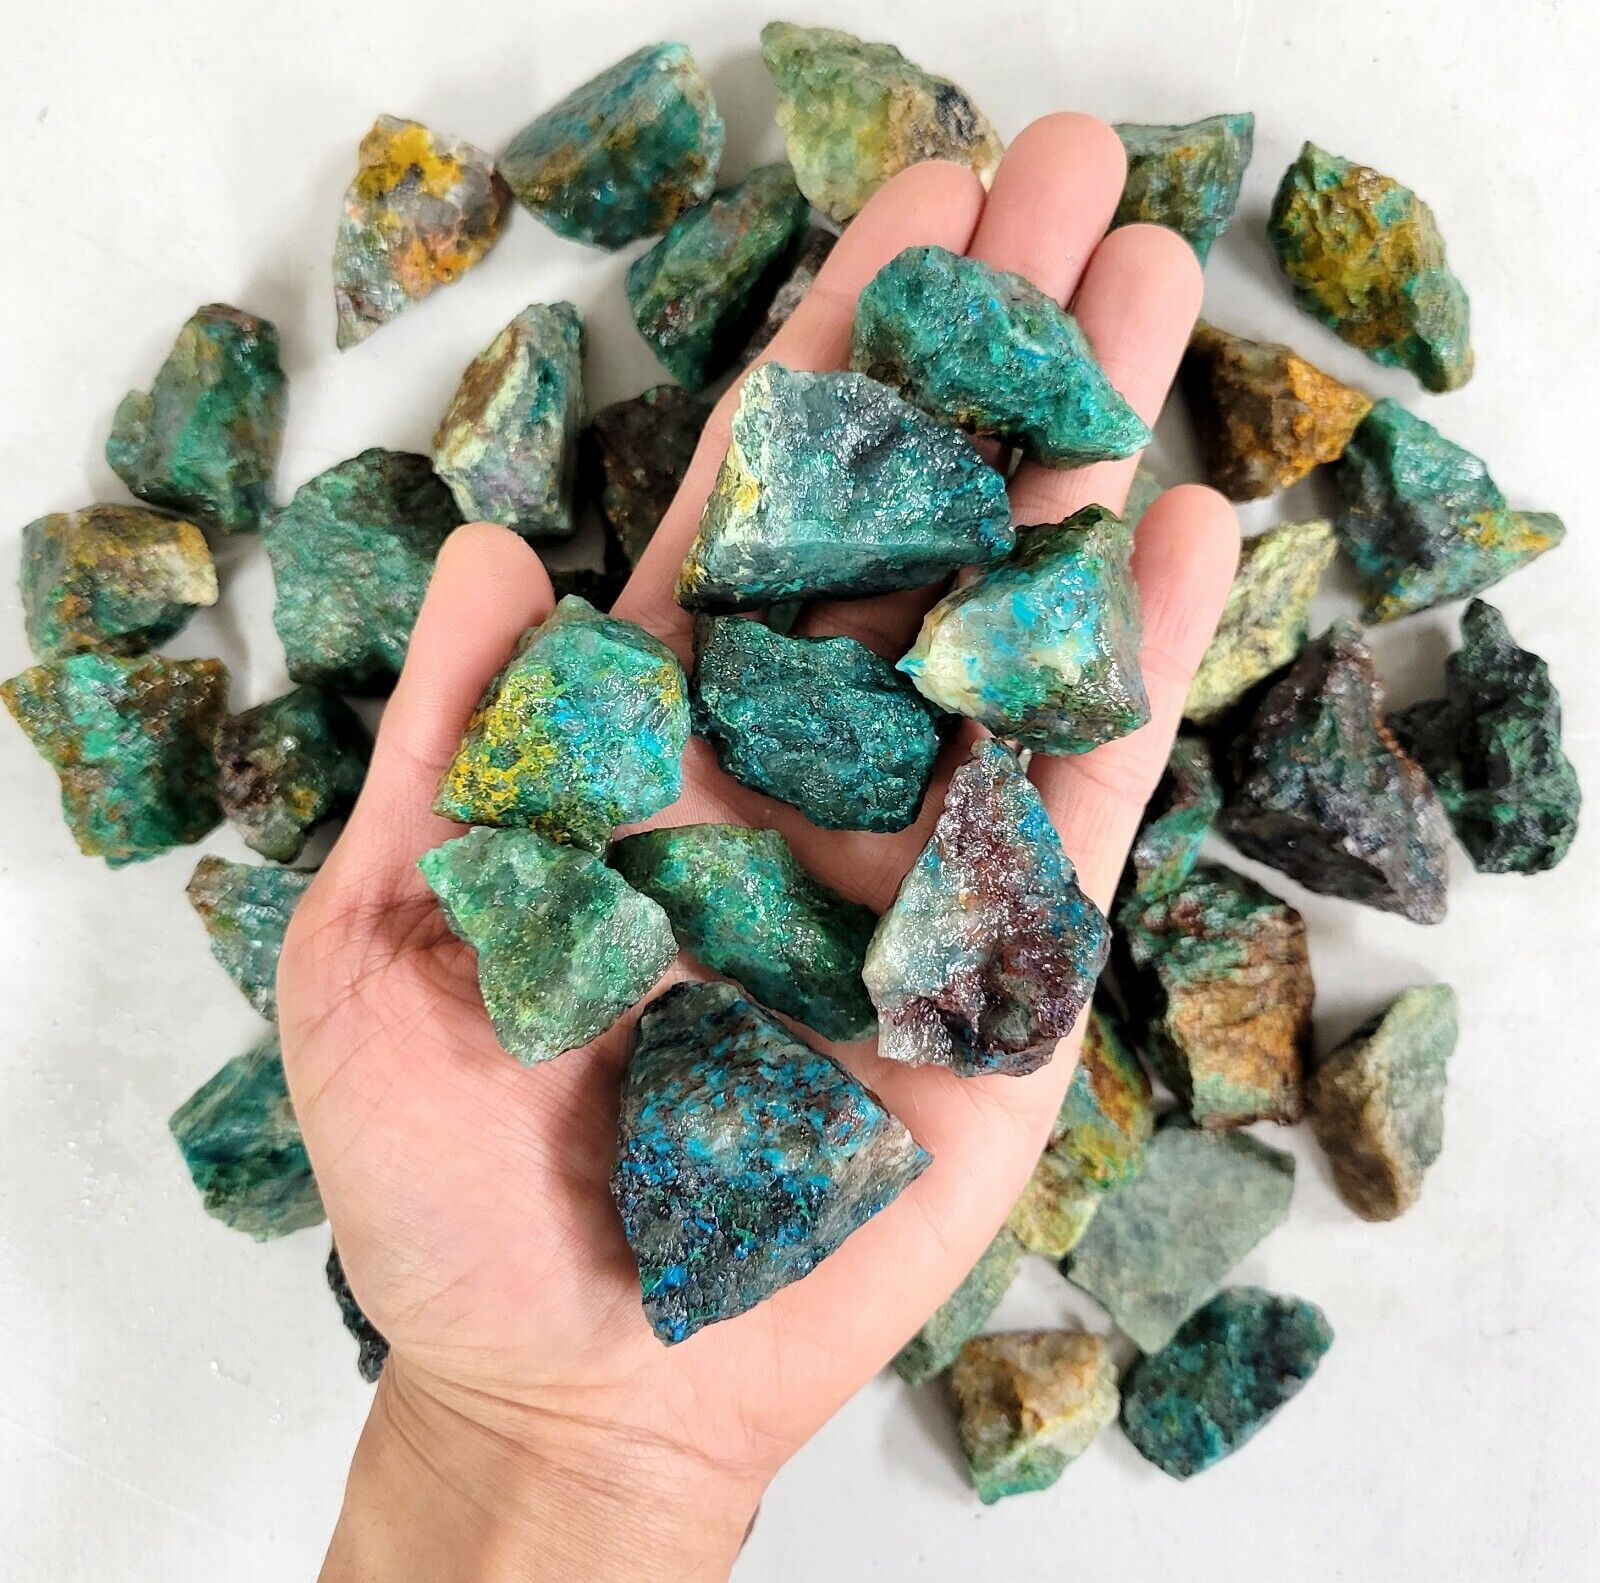 Rough Chrysocolla Crystals - Bulk Raw Gemstones - Healing Crystals from Brazil